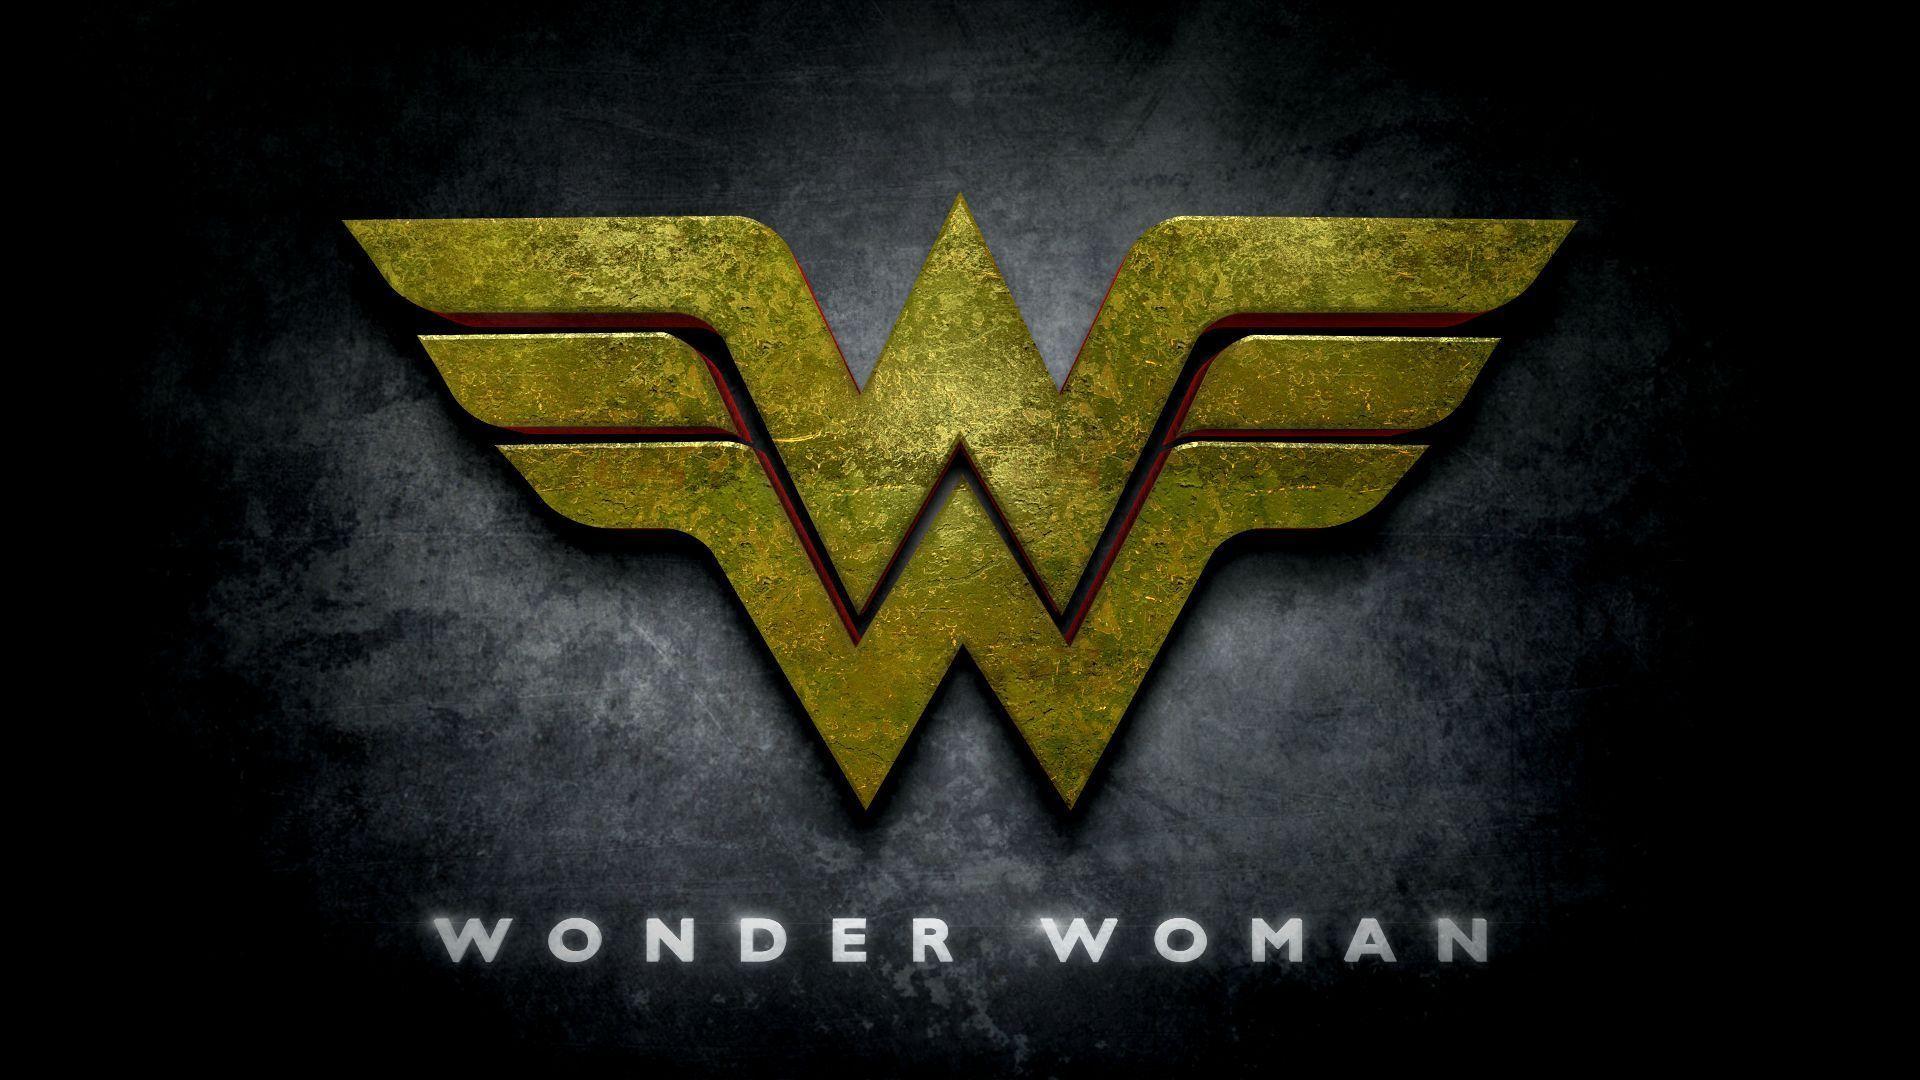 Image For > Wonder Woman Logo Wallpapers